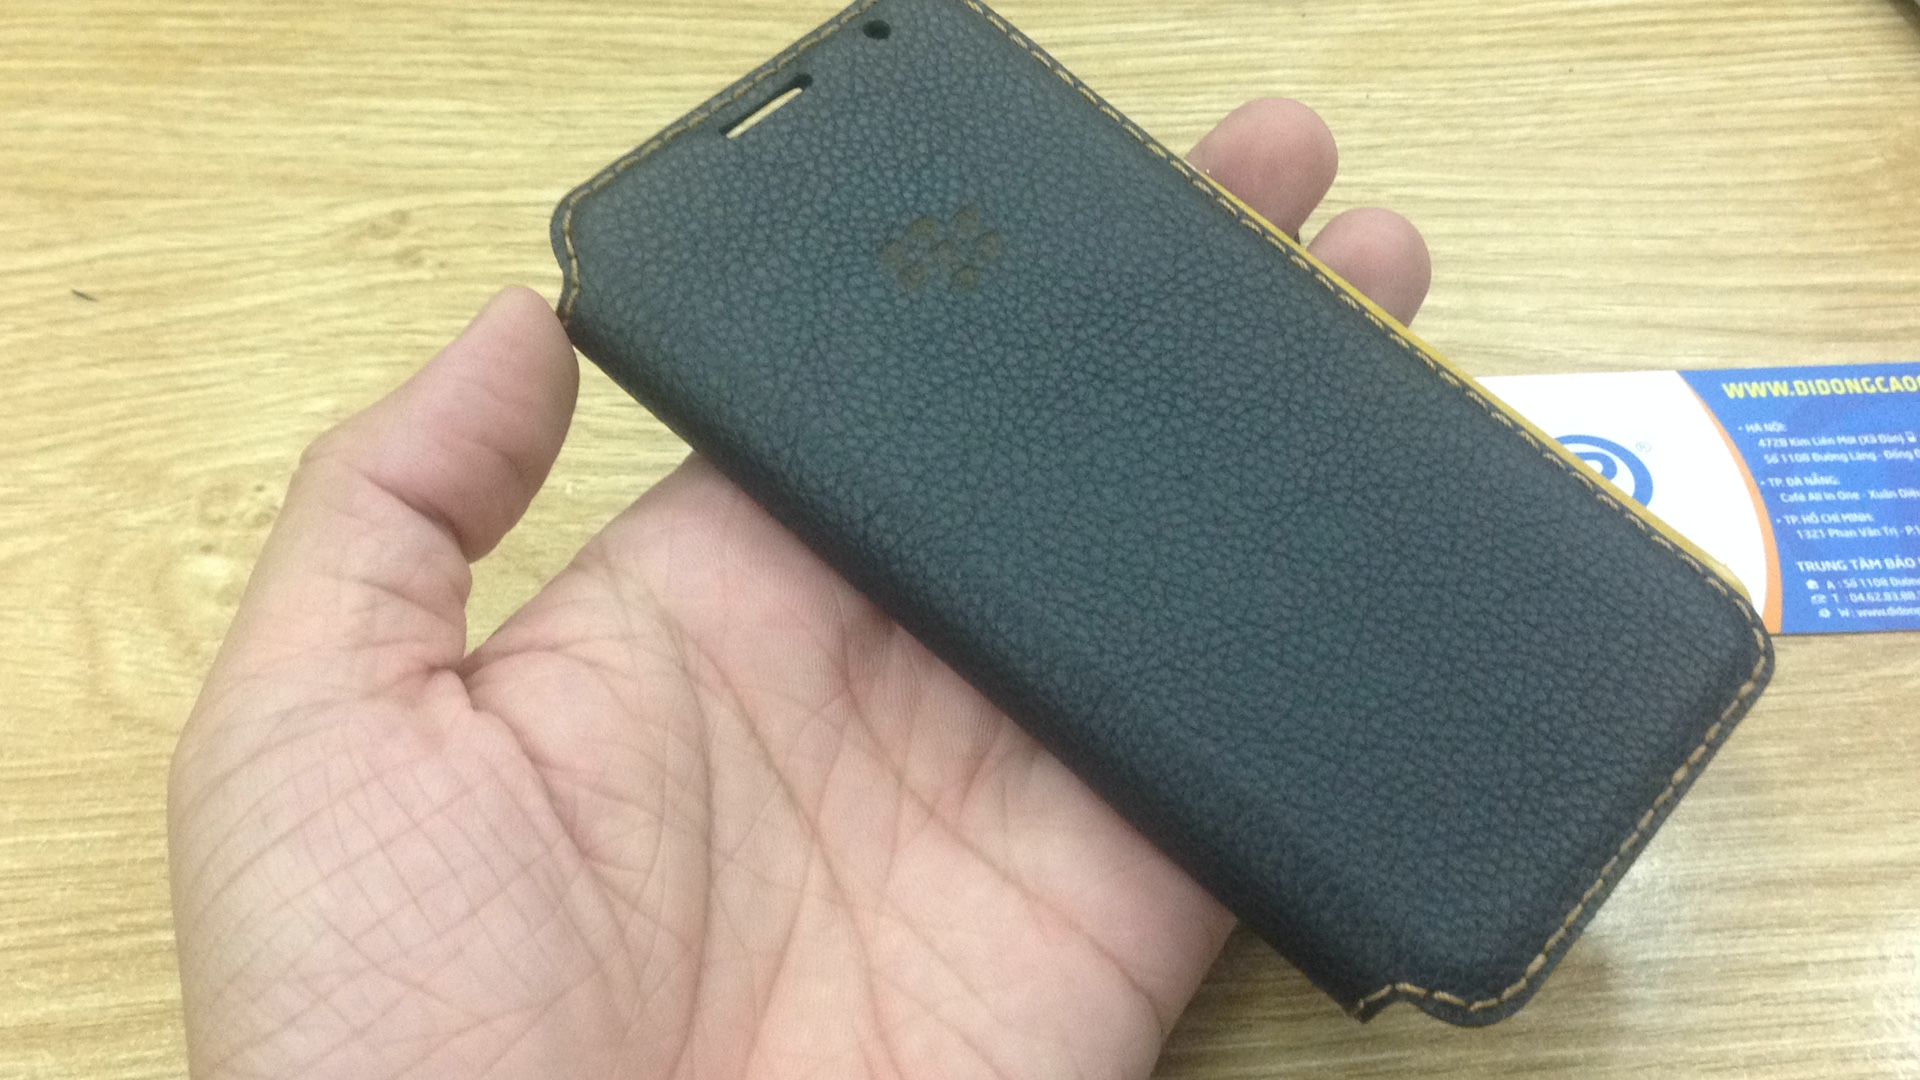 BlackBerry Z30 Leather Flipcover Case Made In Vietnam